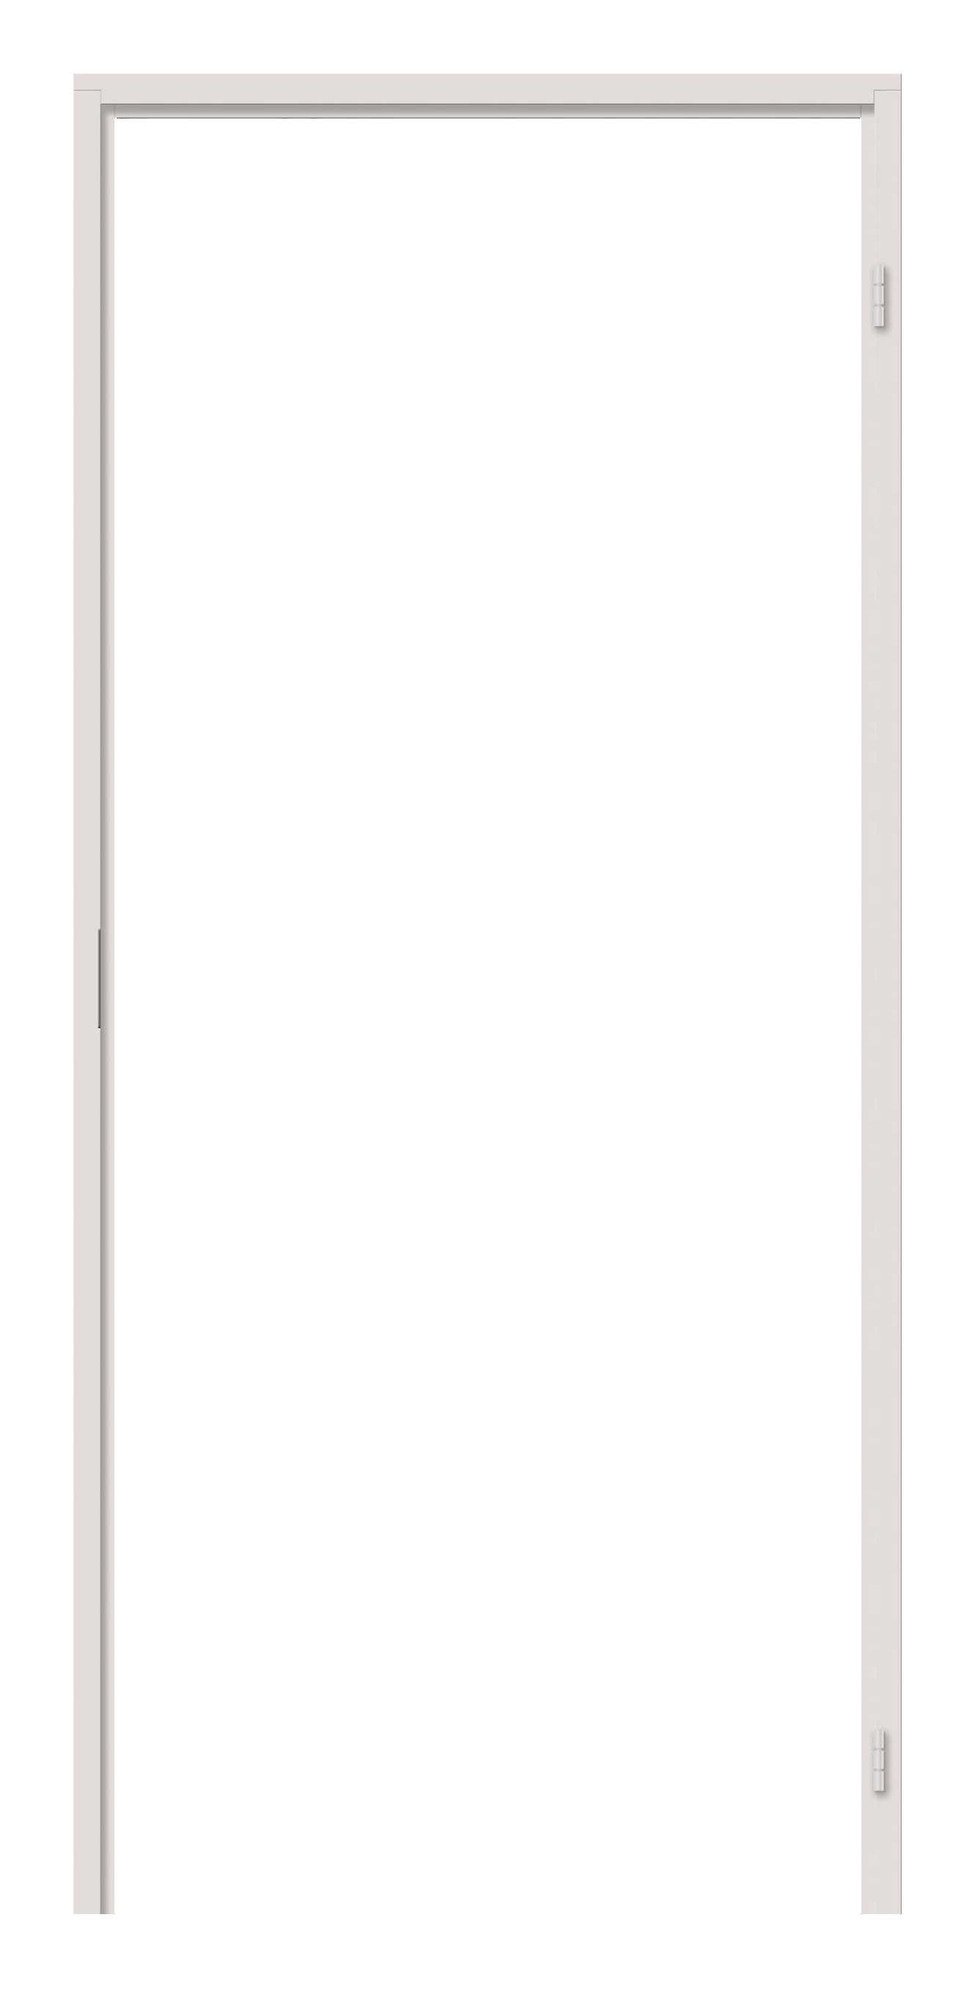 Durų stakta VILJANDI CASPIAN, SILE, FORTE, horizontali dalis, 90 x 890 mm, balta